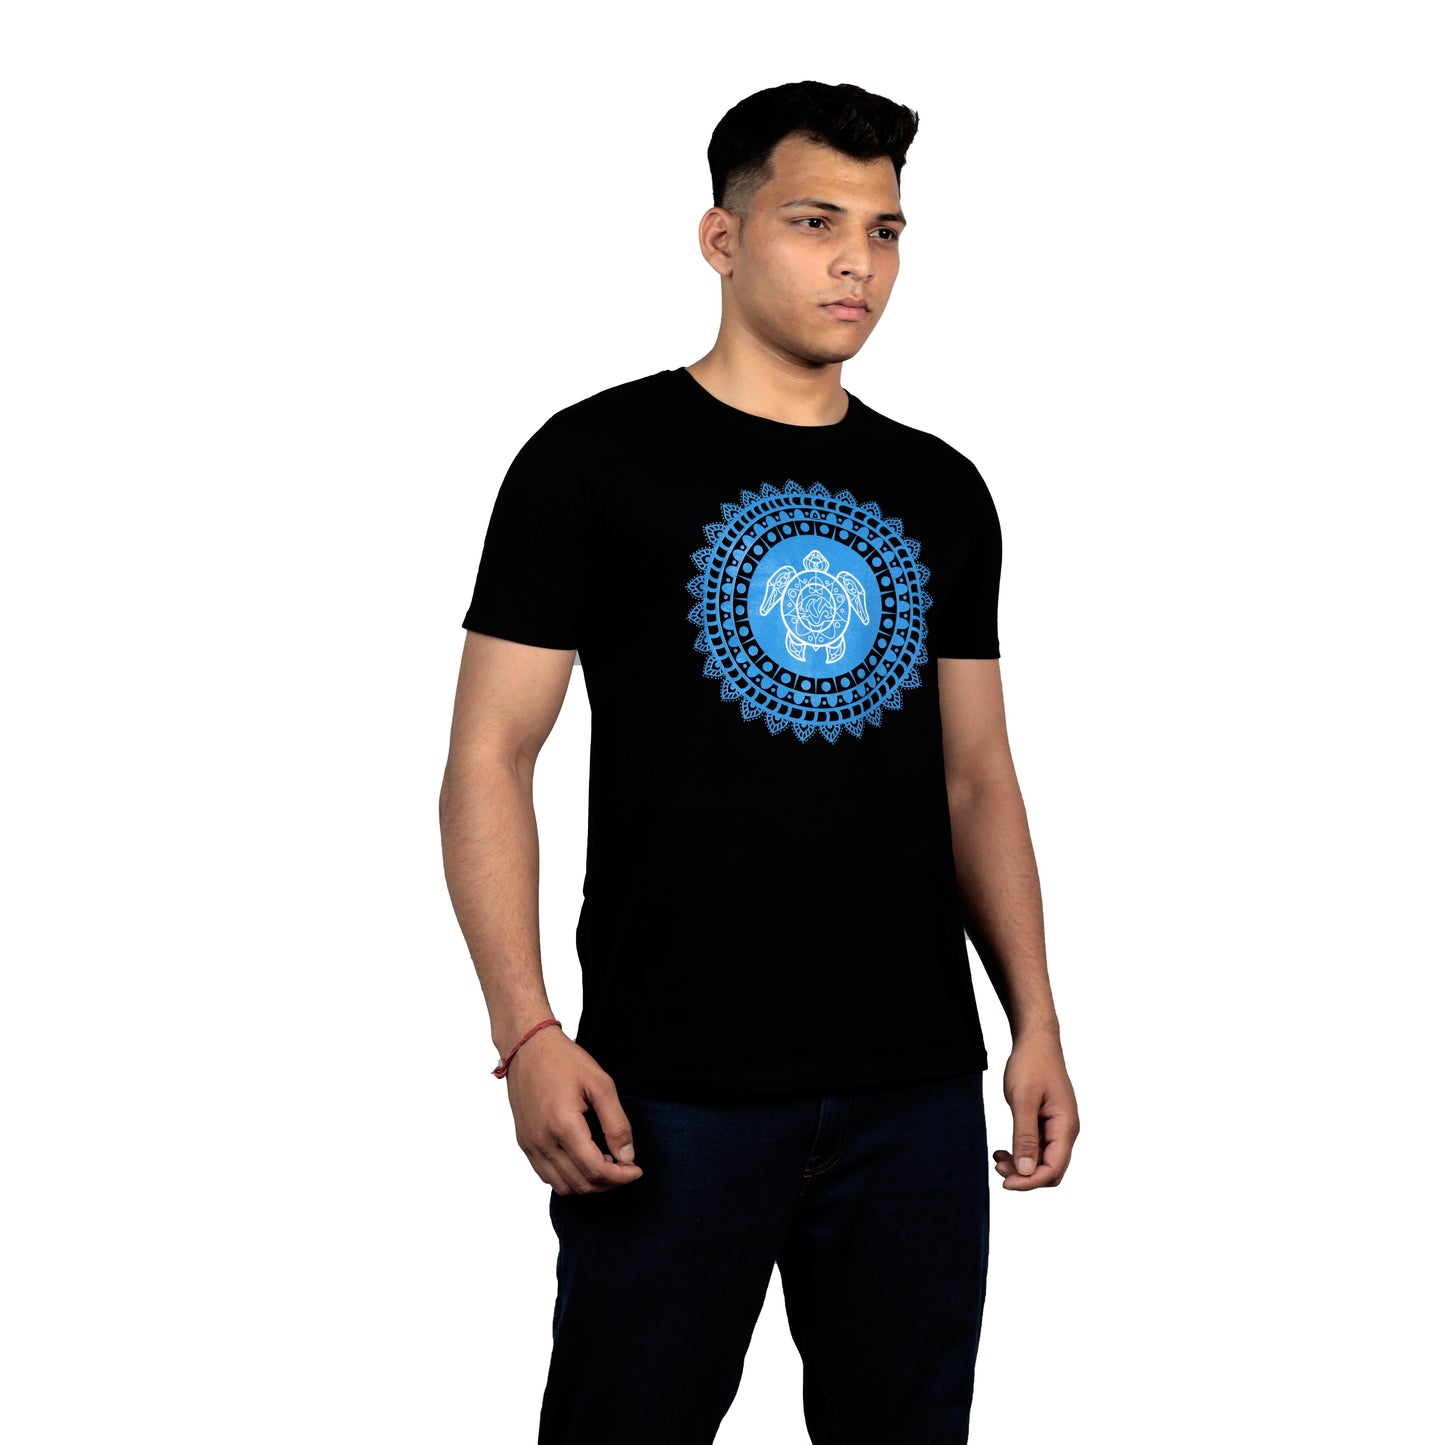 Nirvana Blue Turtle Printed T-shirt In Black Color For Men